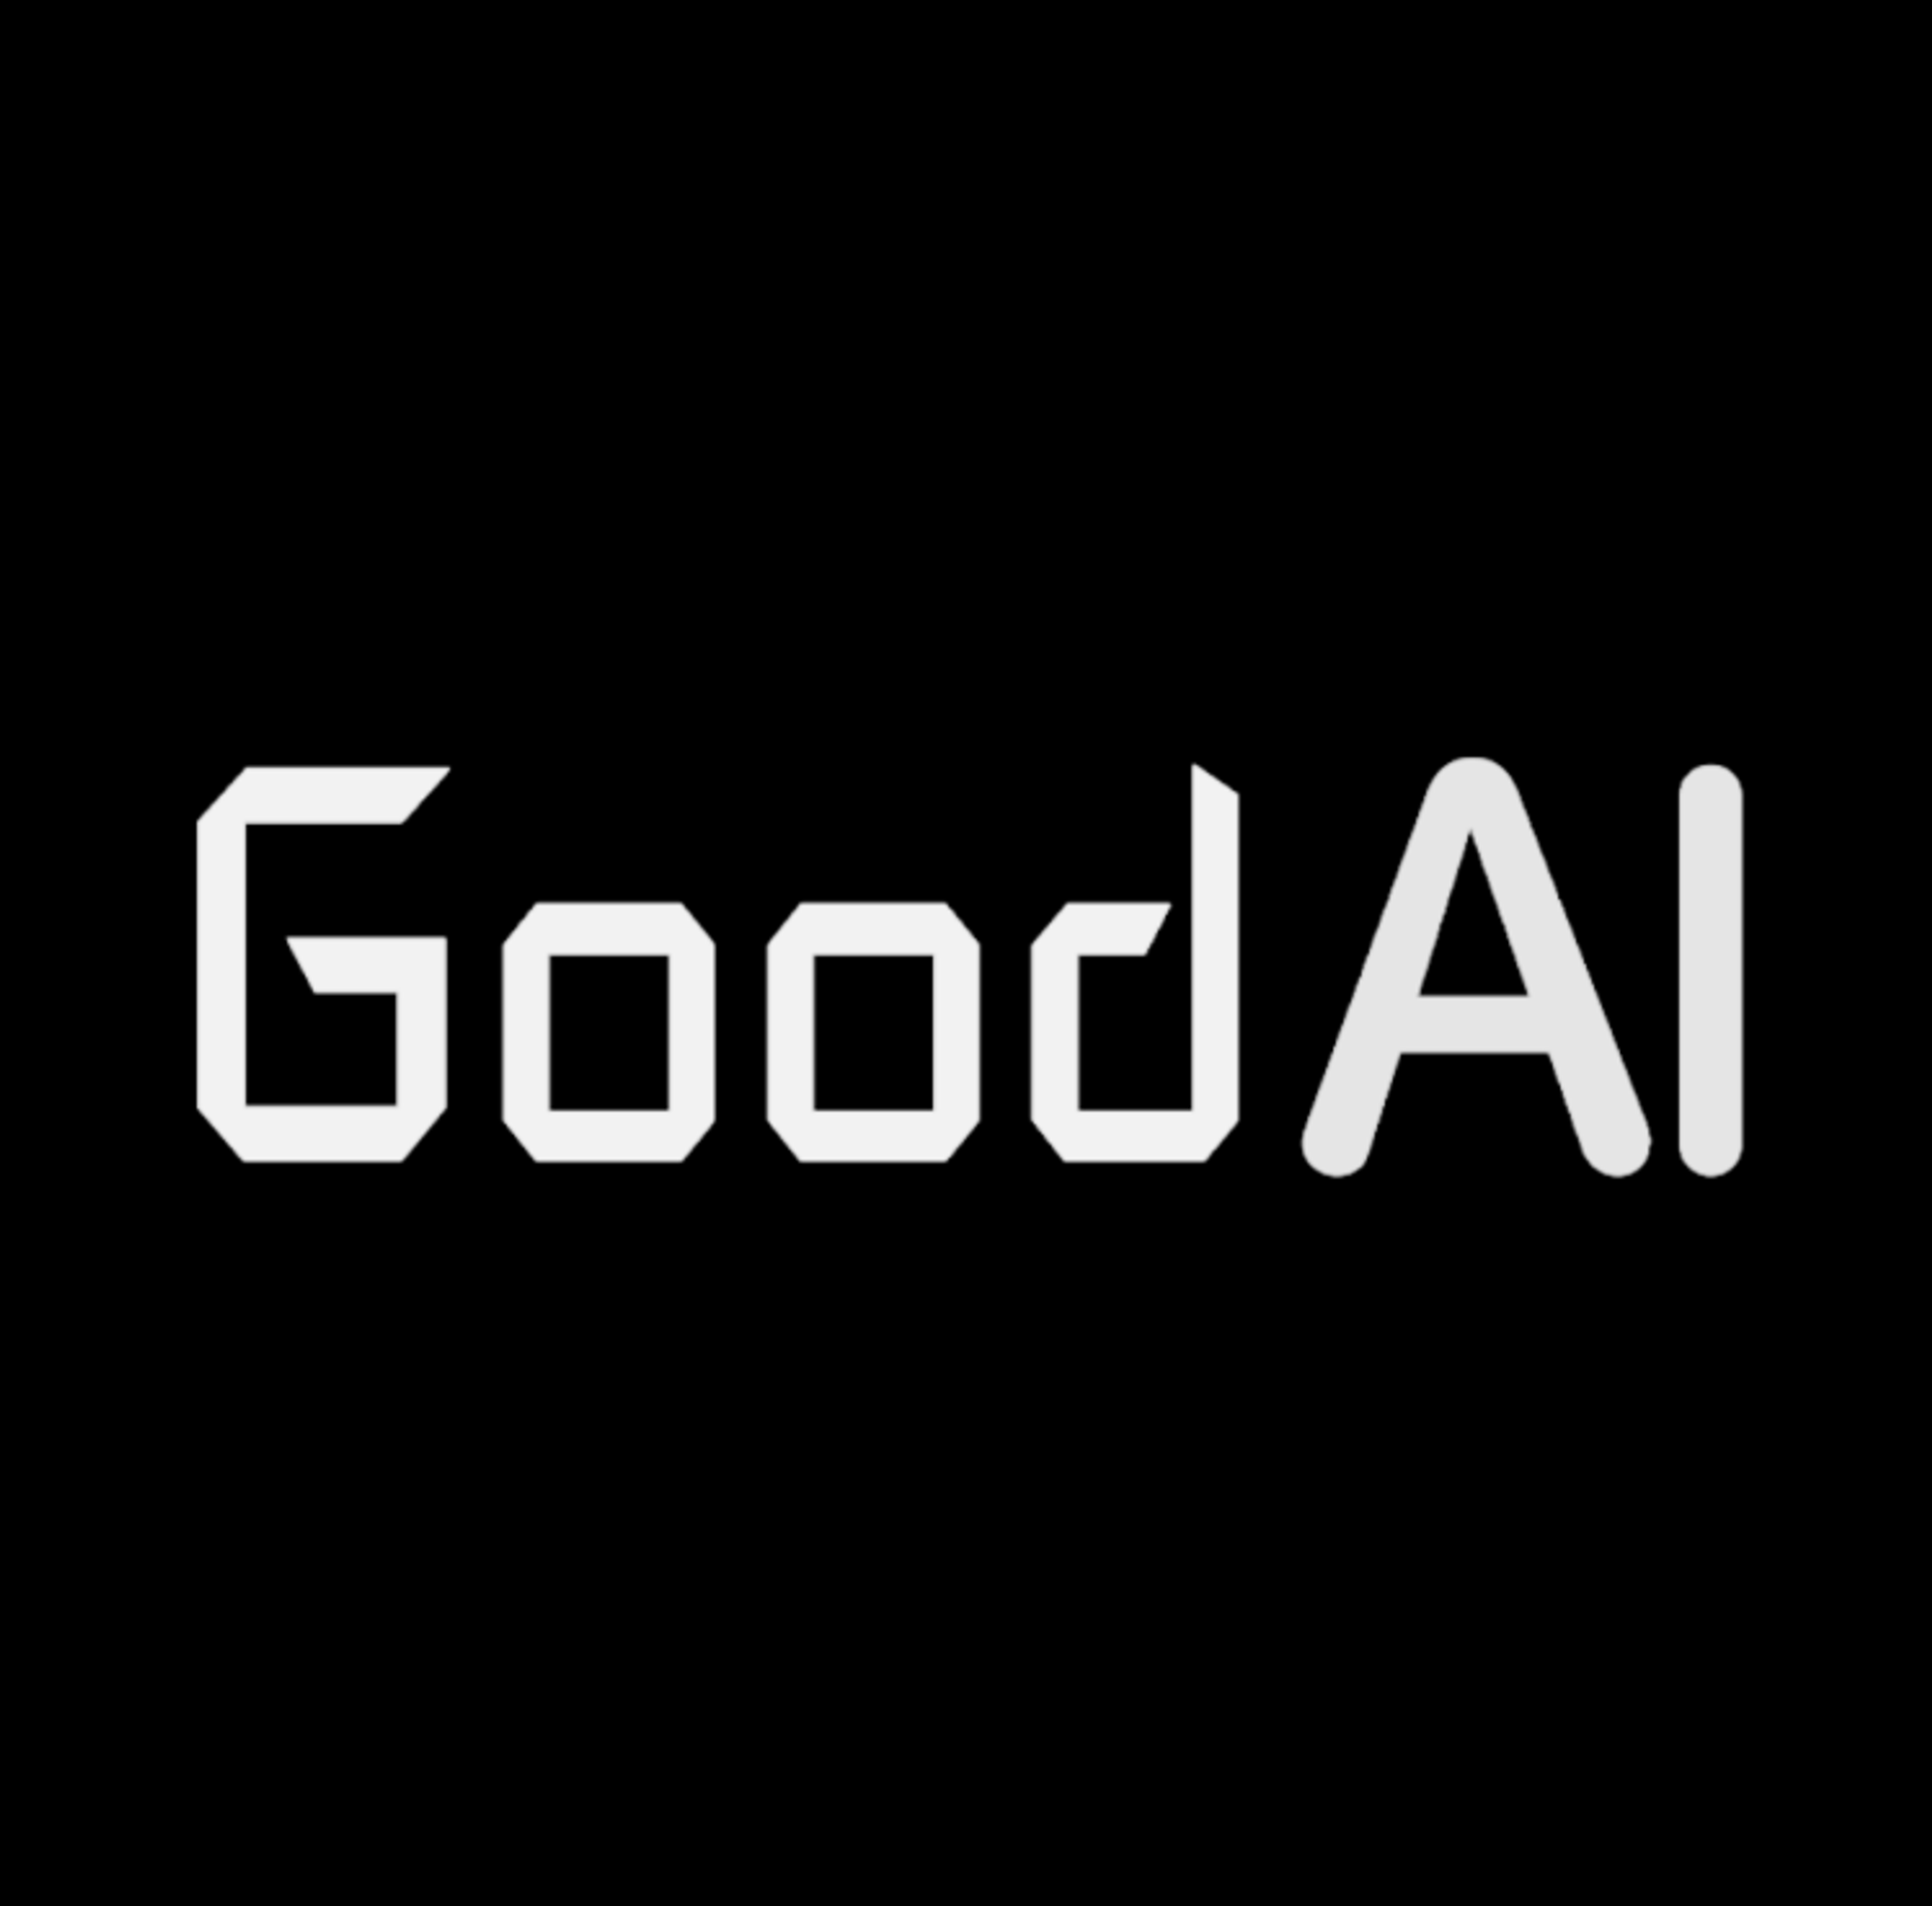 GoodAI - Develop safe general artificial intelligence